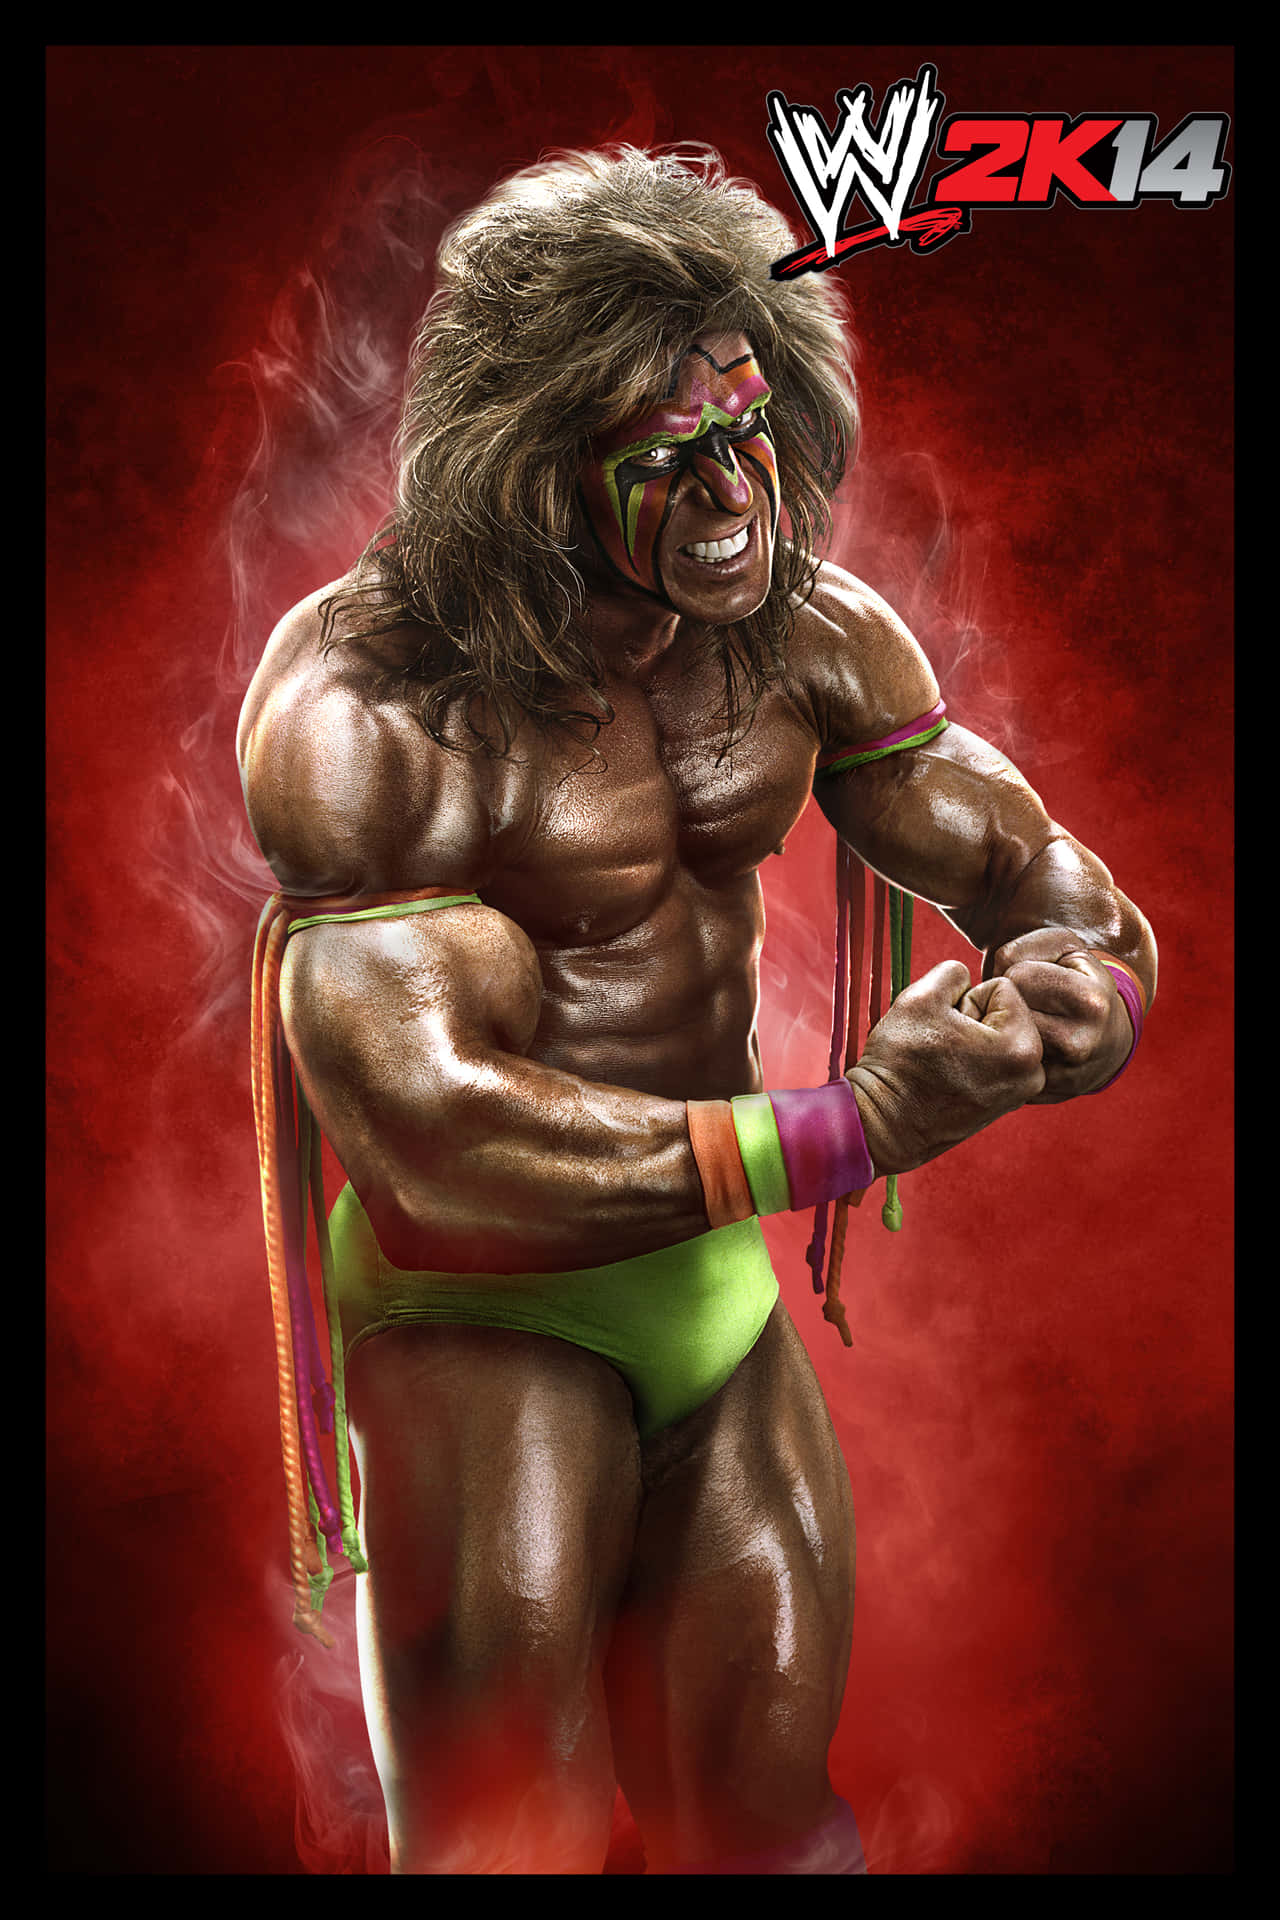 Wcw Champion Ultimate Warrior Wwe 2k14 Digital Artwork Wallpaper